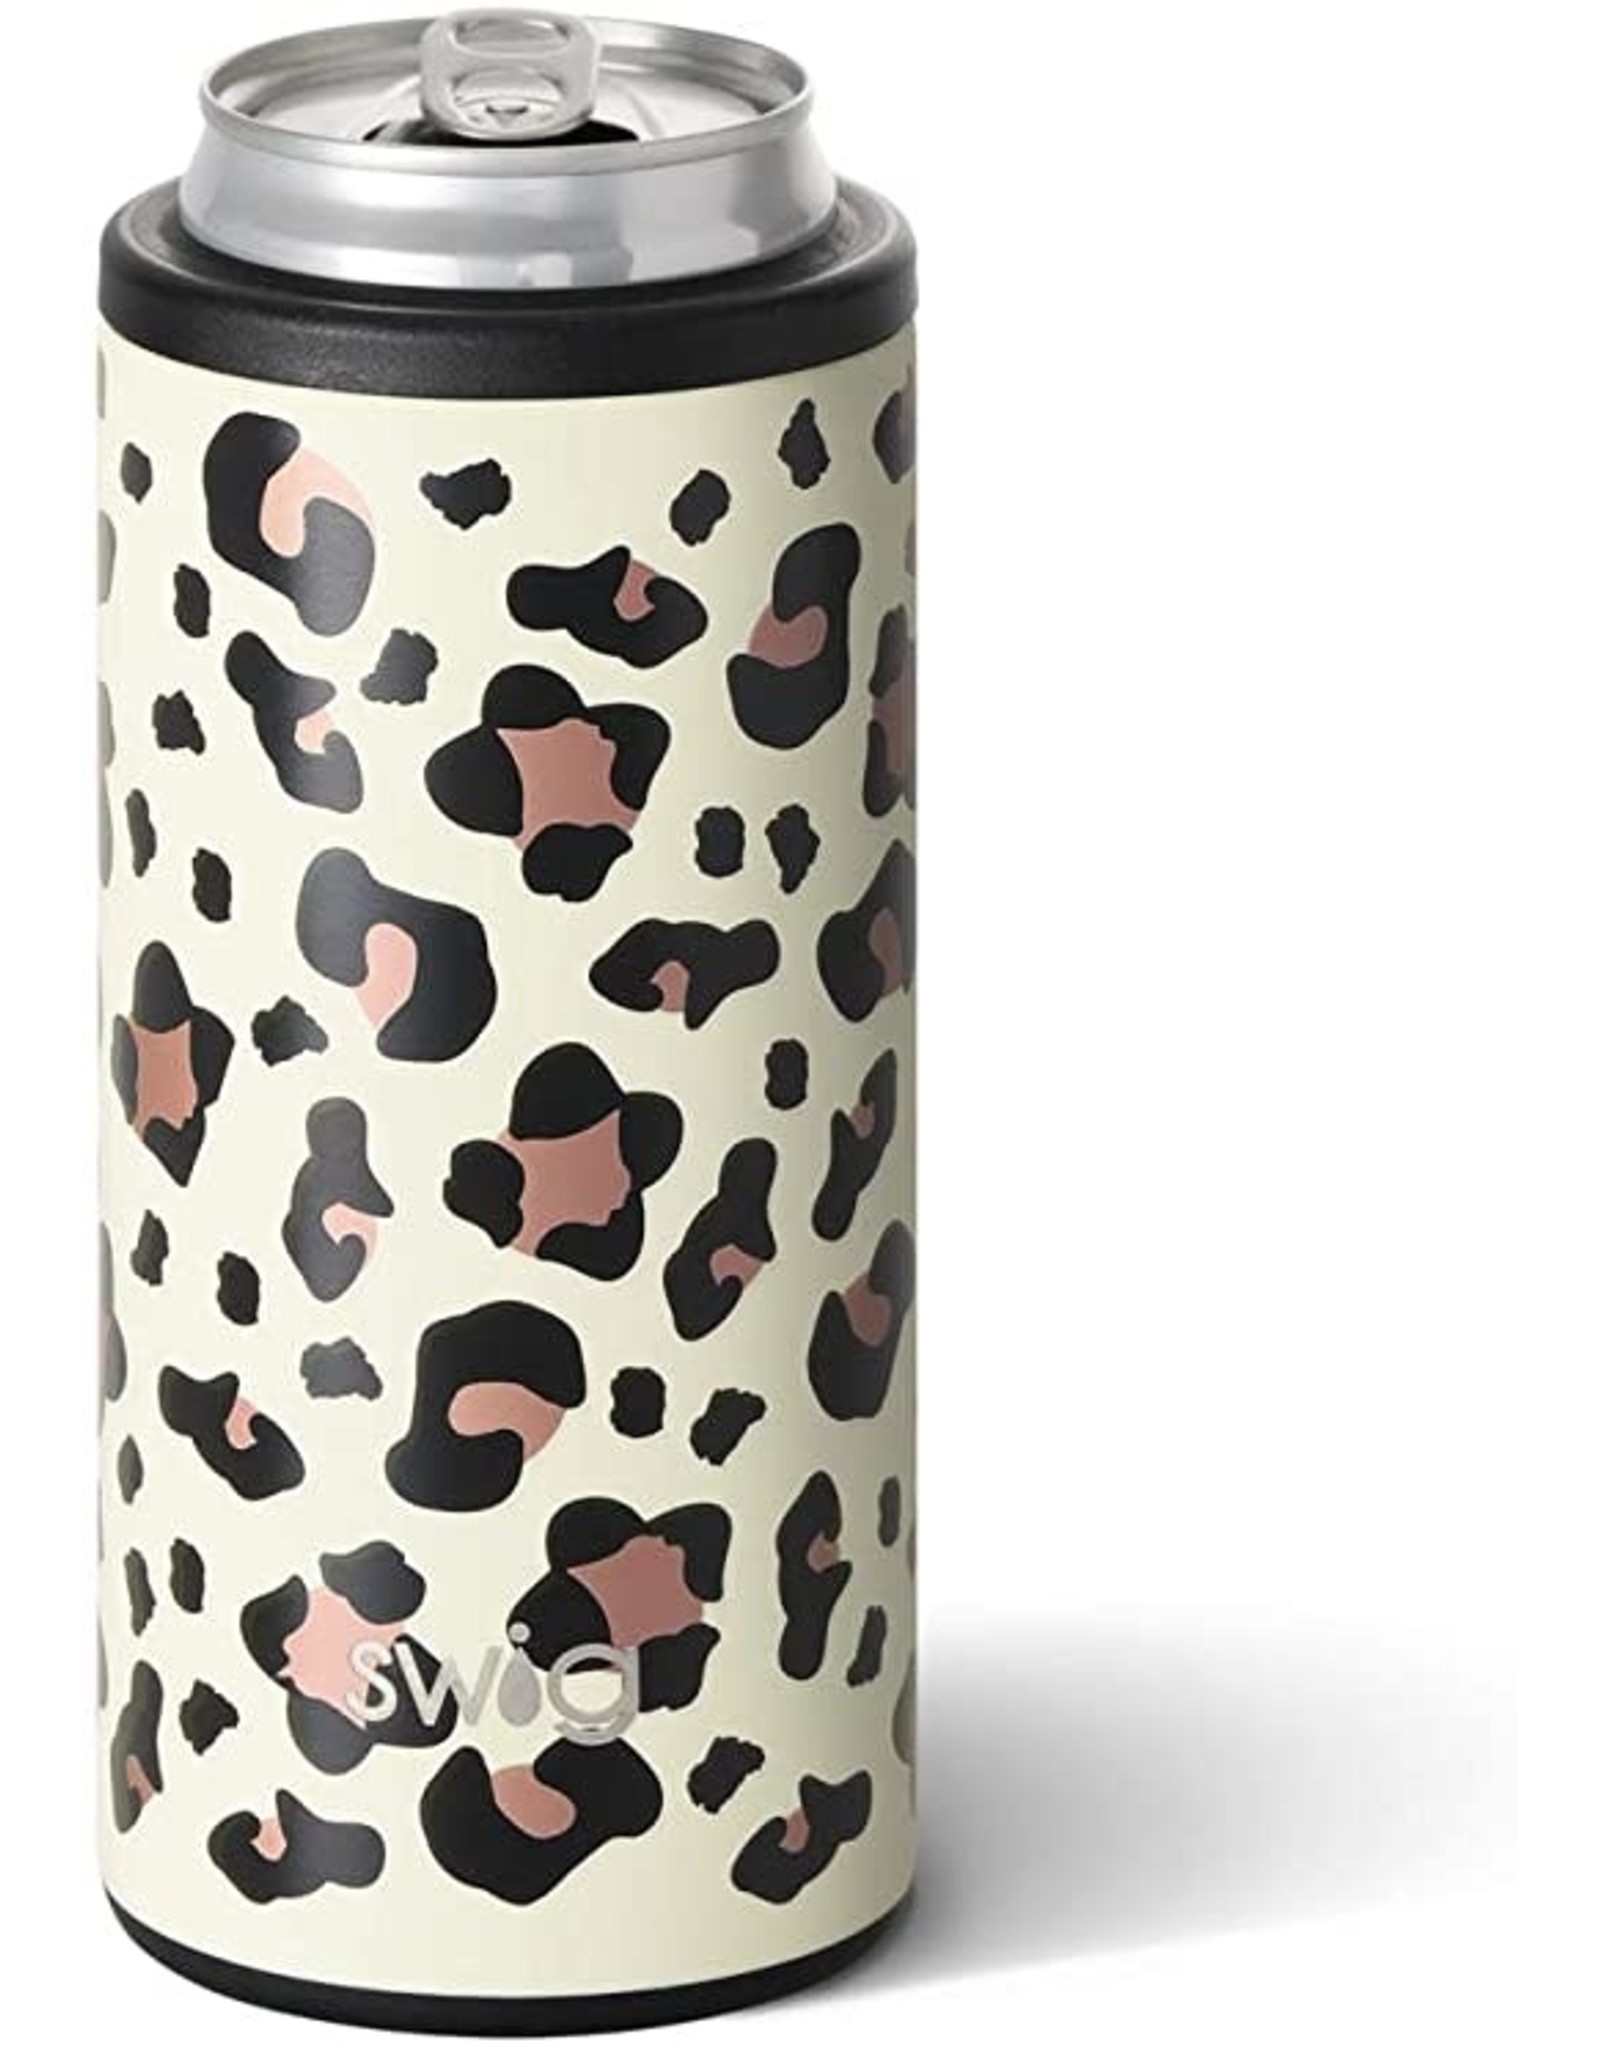 Swig 12 oz Skinny Can Cooler - Luxy Leopard